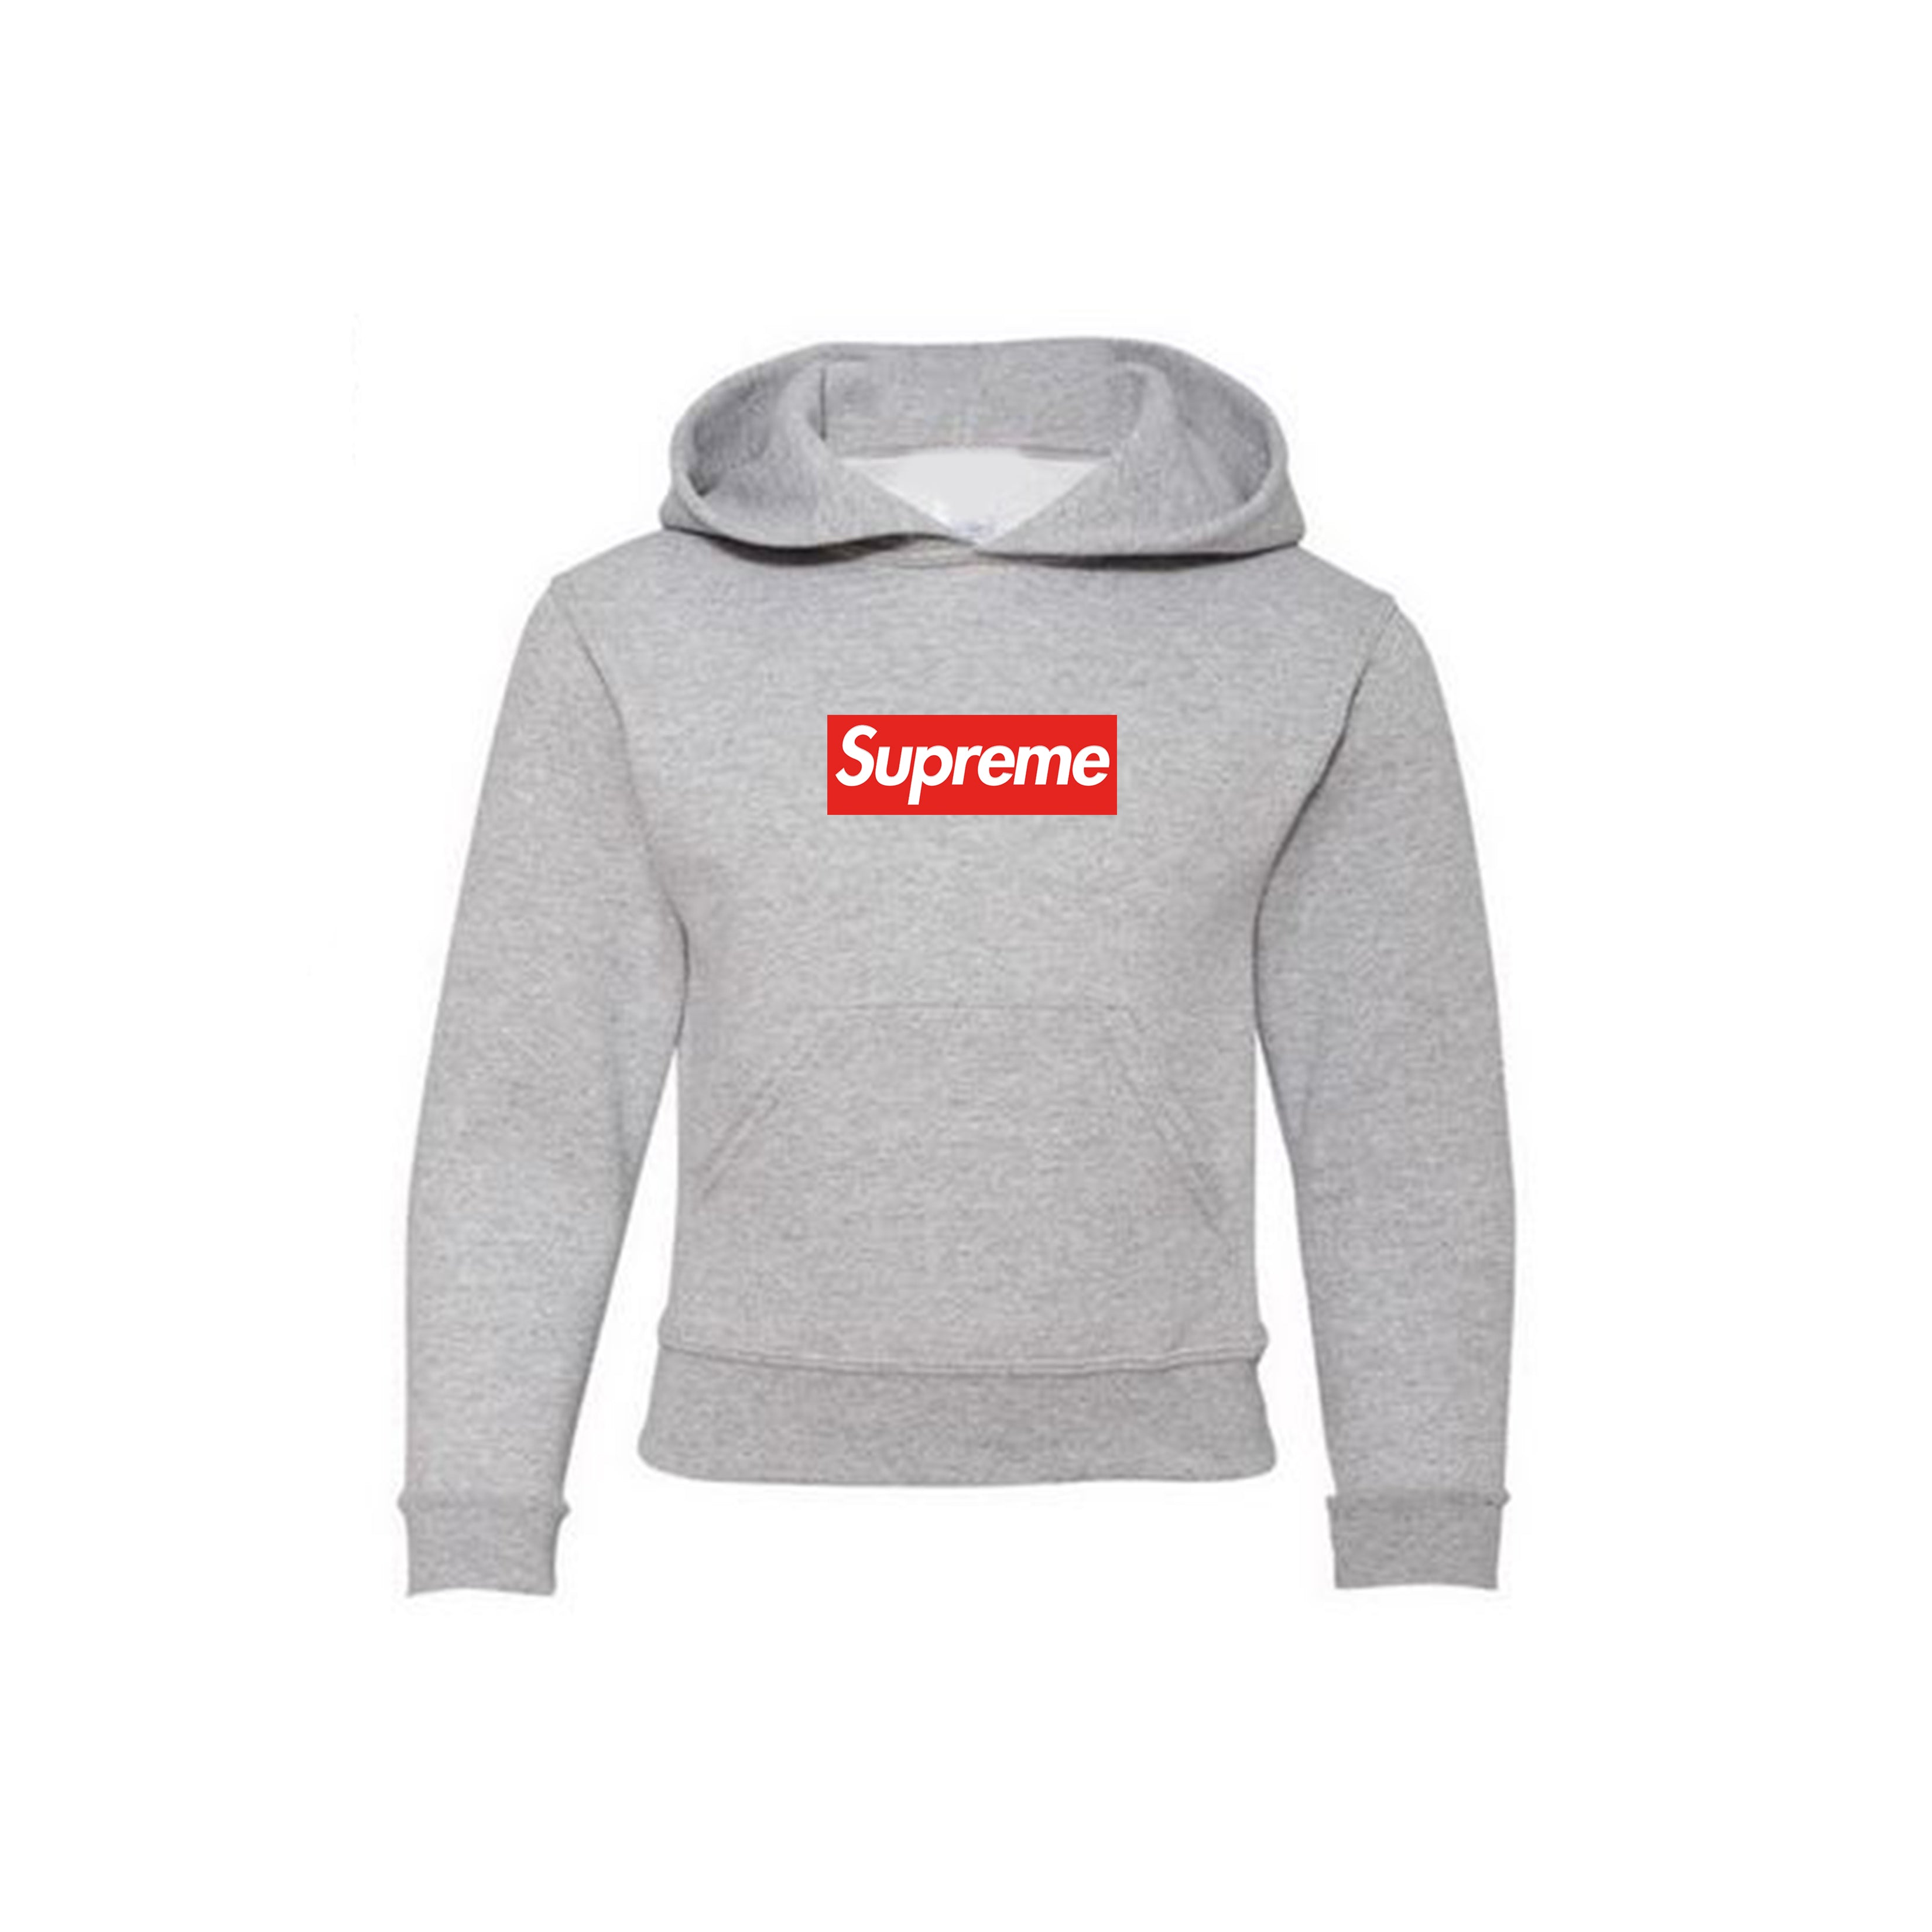 Supreme Hoodies & Sweatshirts for Men for Sale